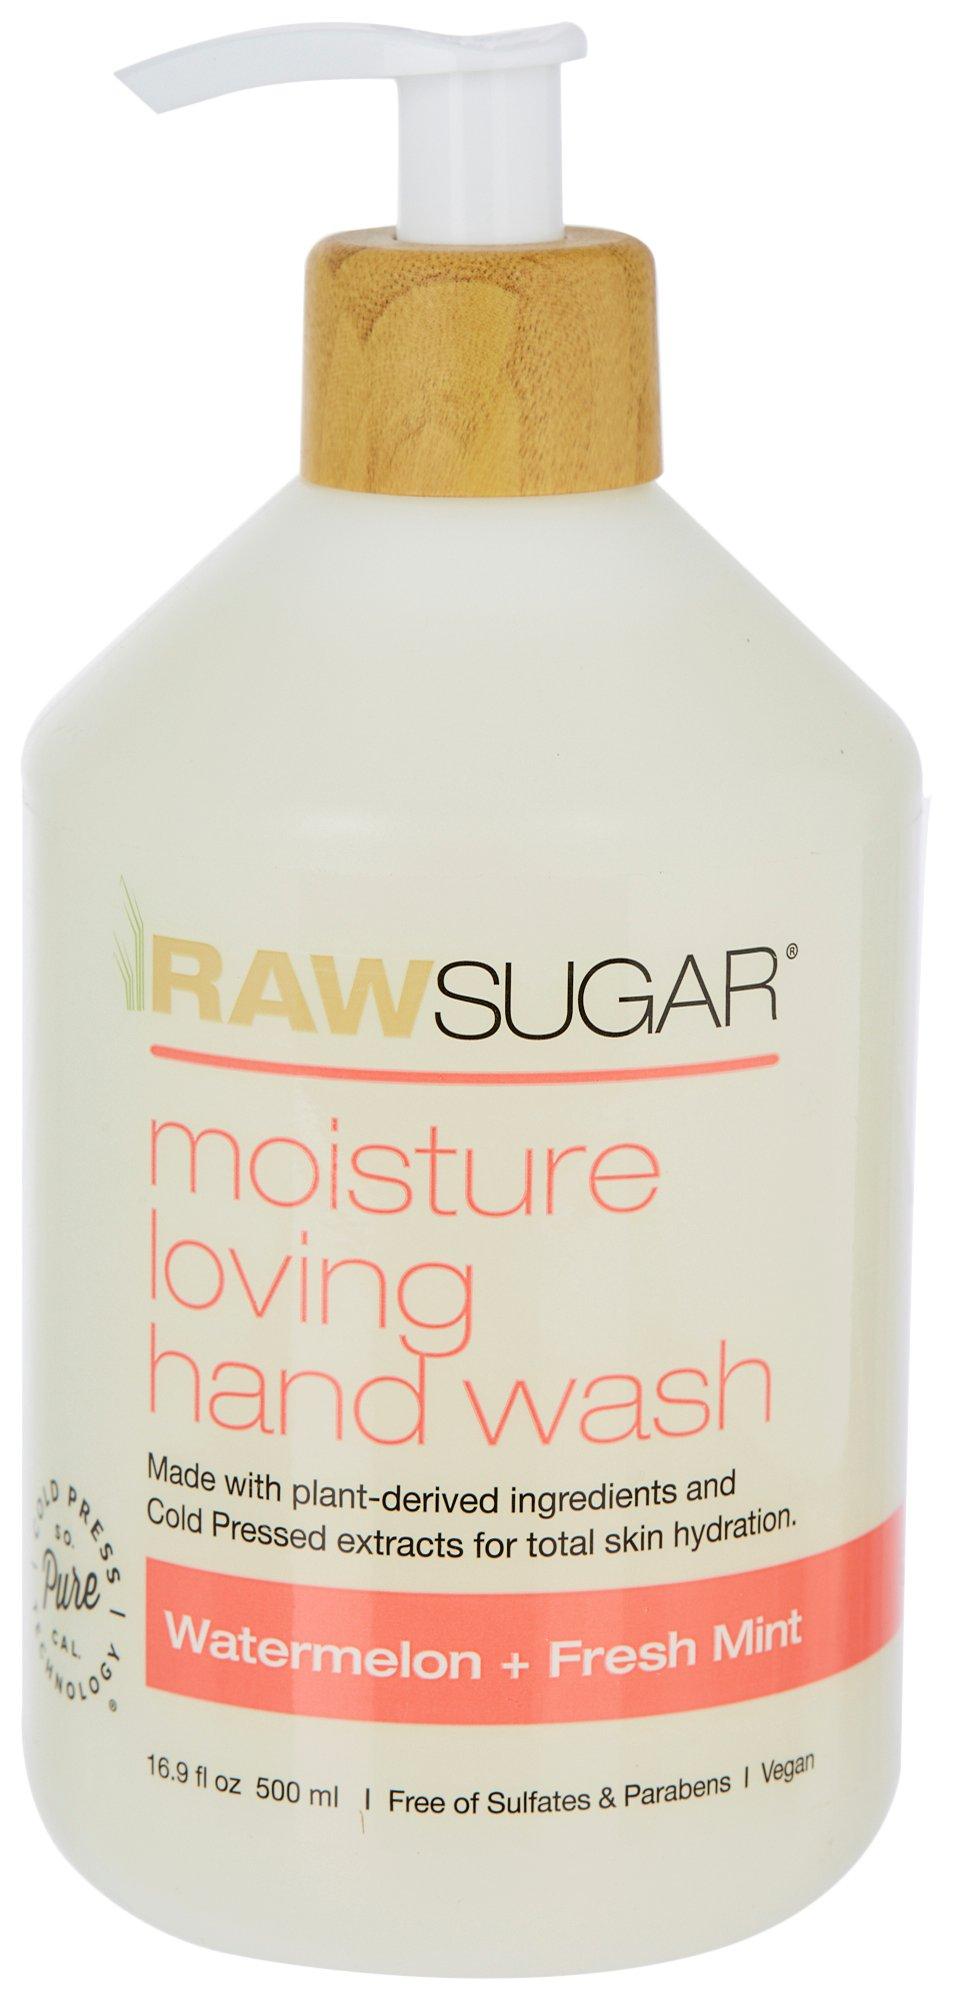 Raw Sugar Watermelon & Fresh Mint Moisture Loving Hand Wash